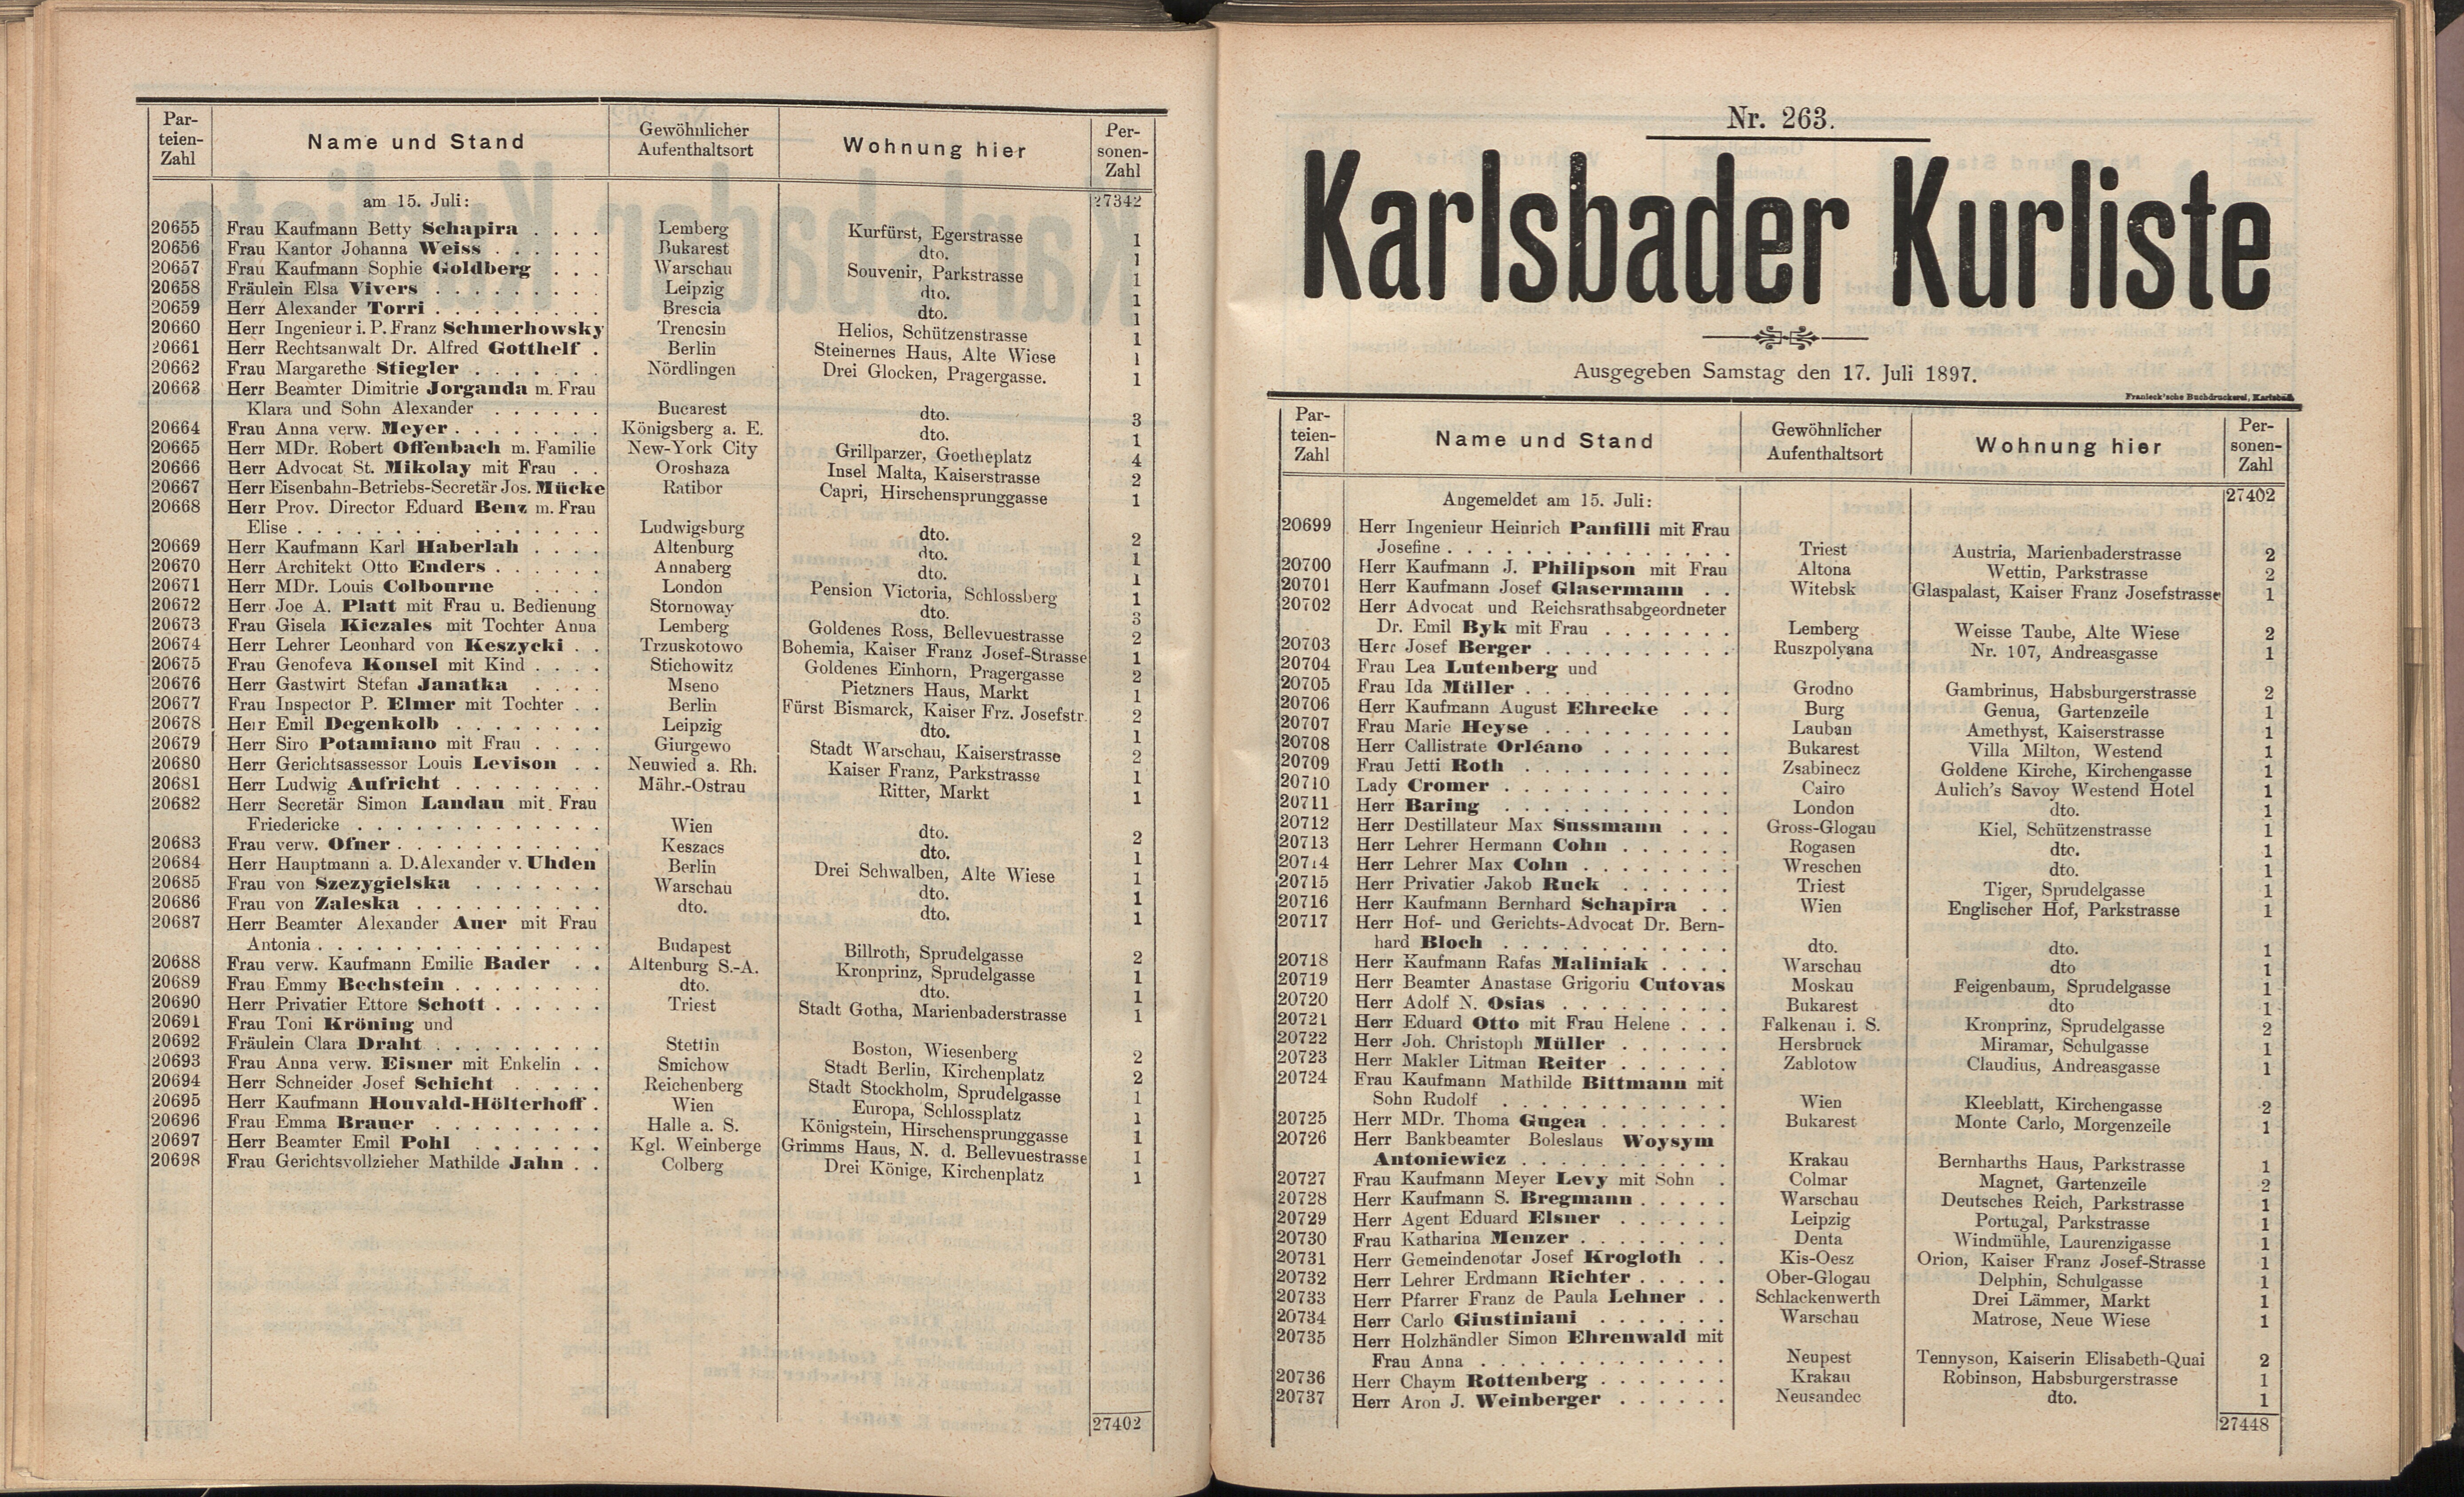 282. soap-kv_knihovna_karlsbader-kurliste-1897_2830